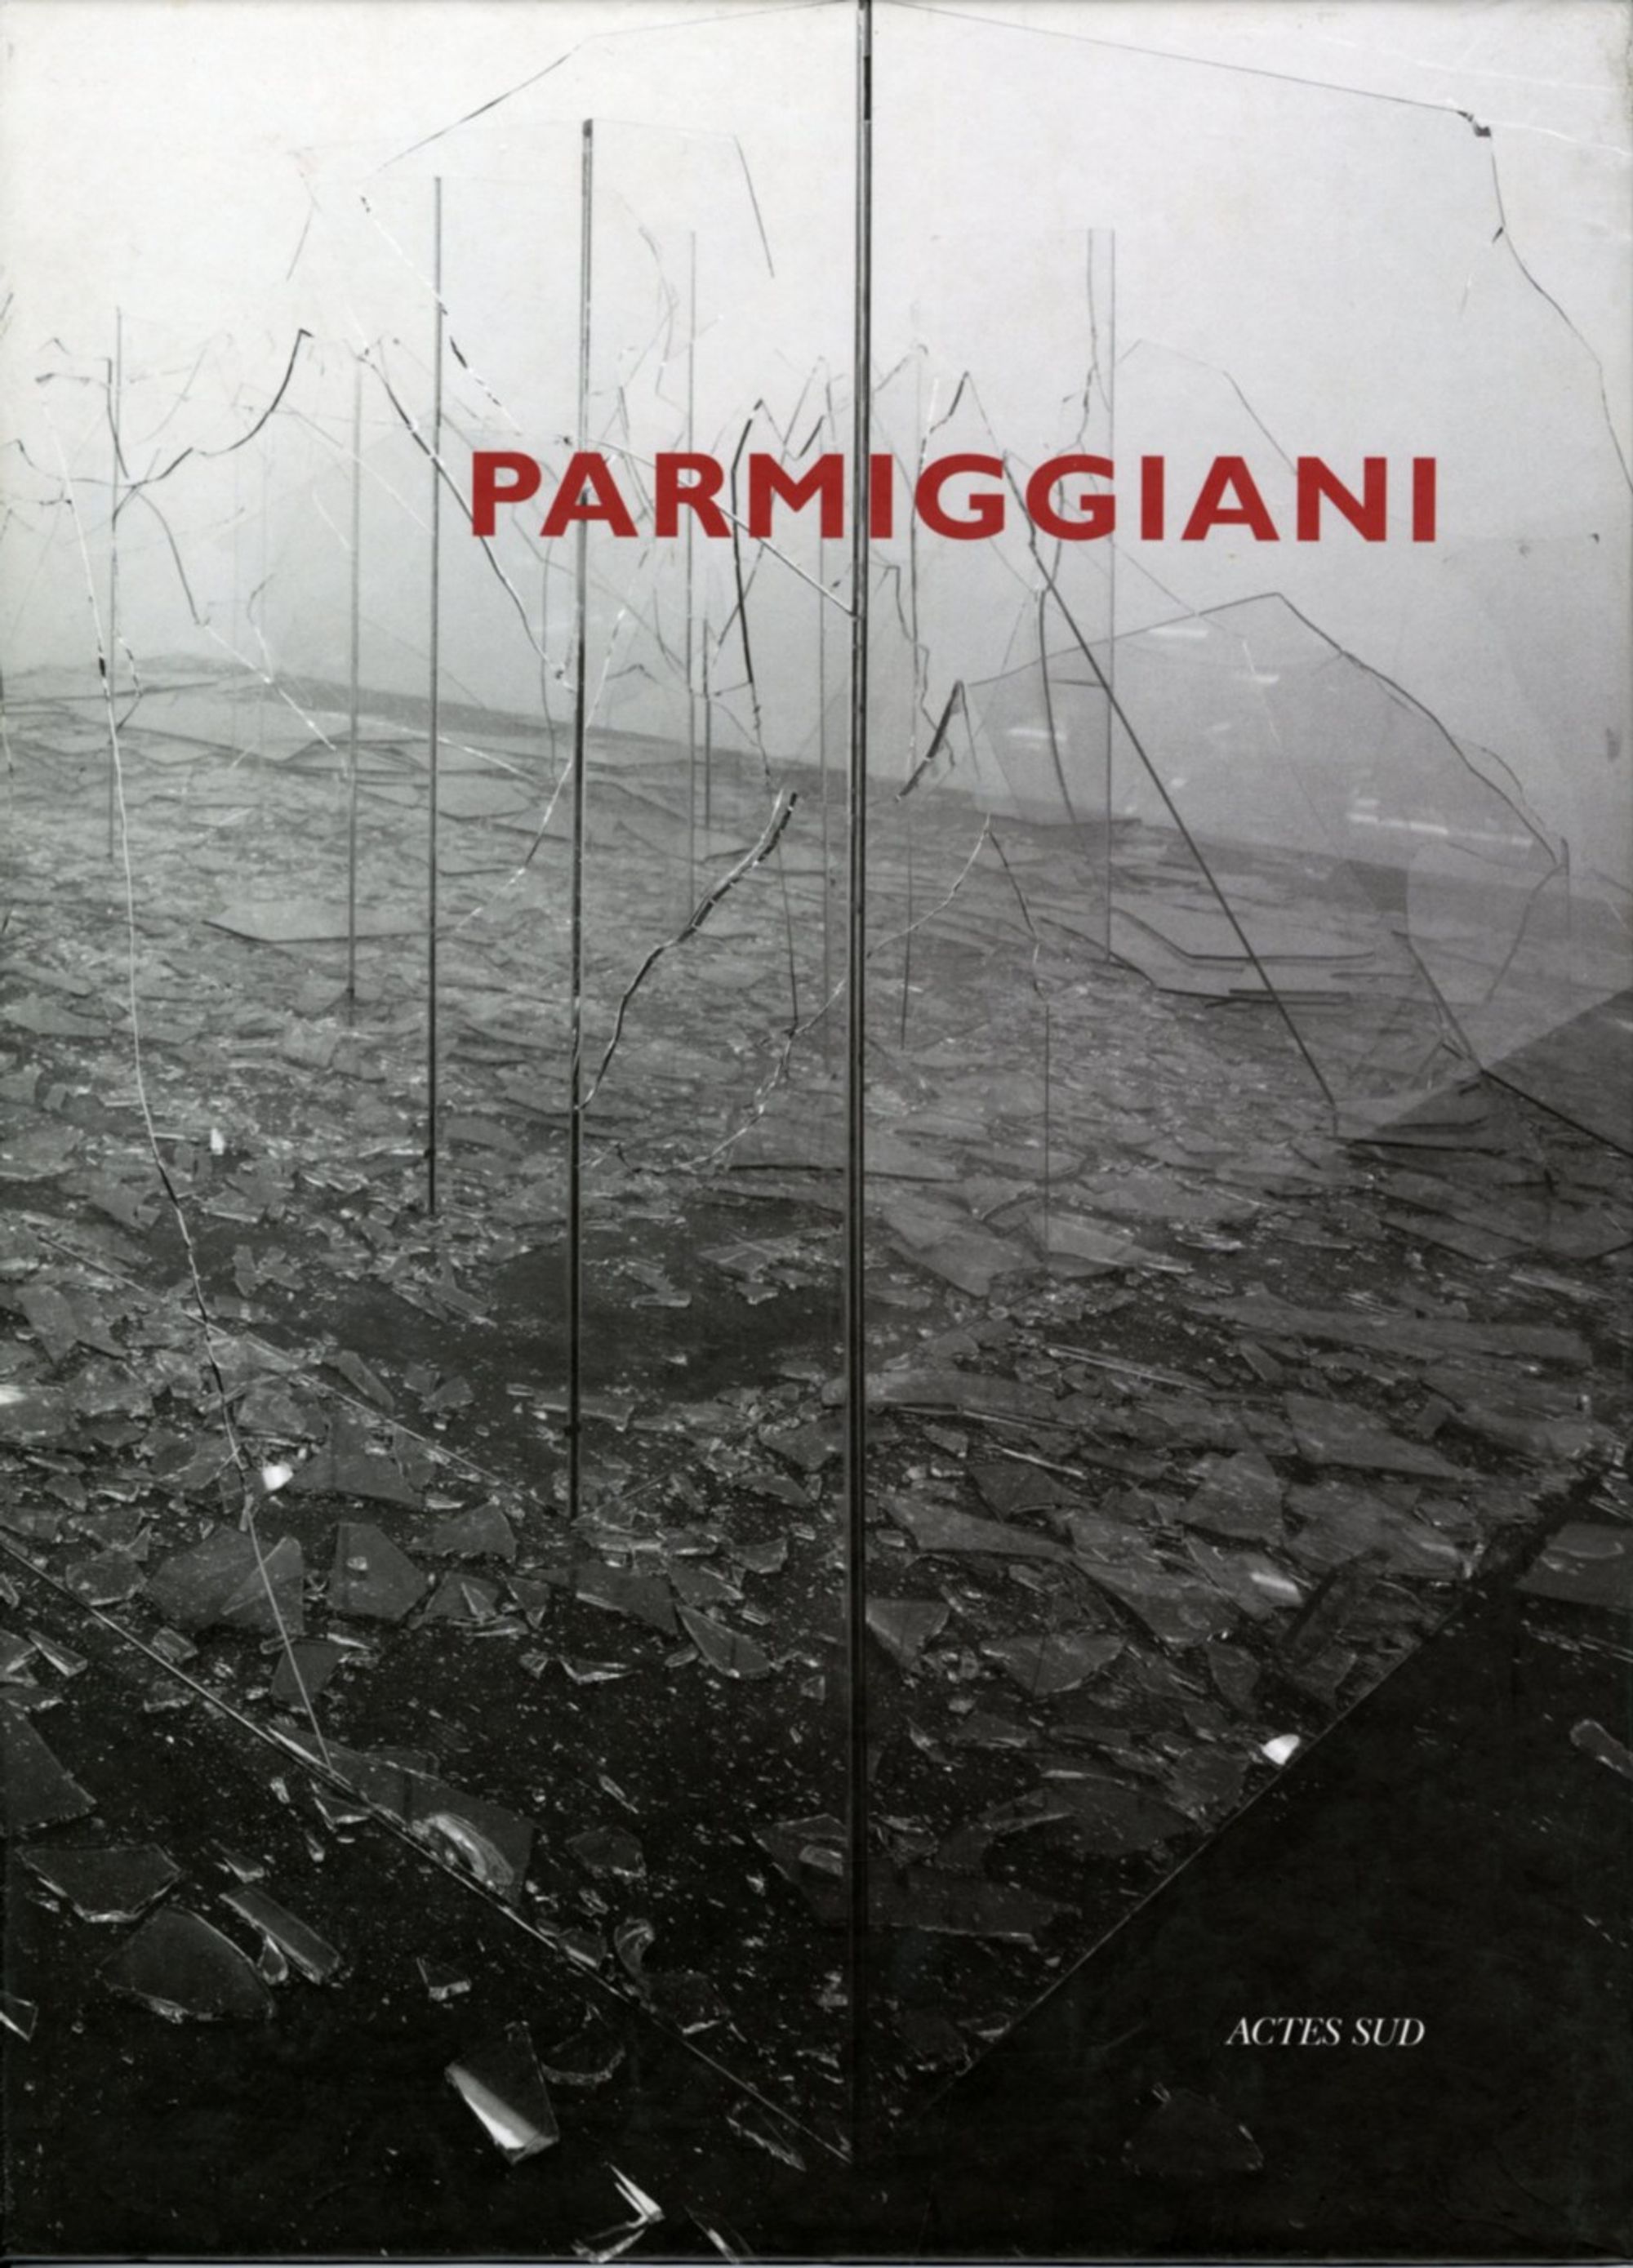 Detail view of Claudio Parmiggiani against a plain gray background